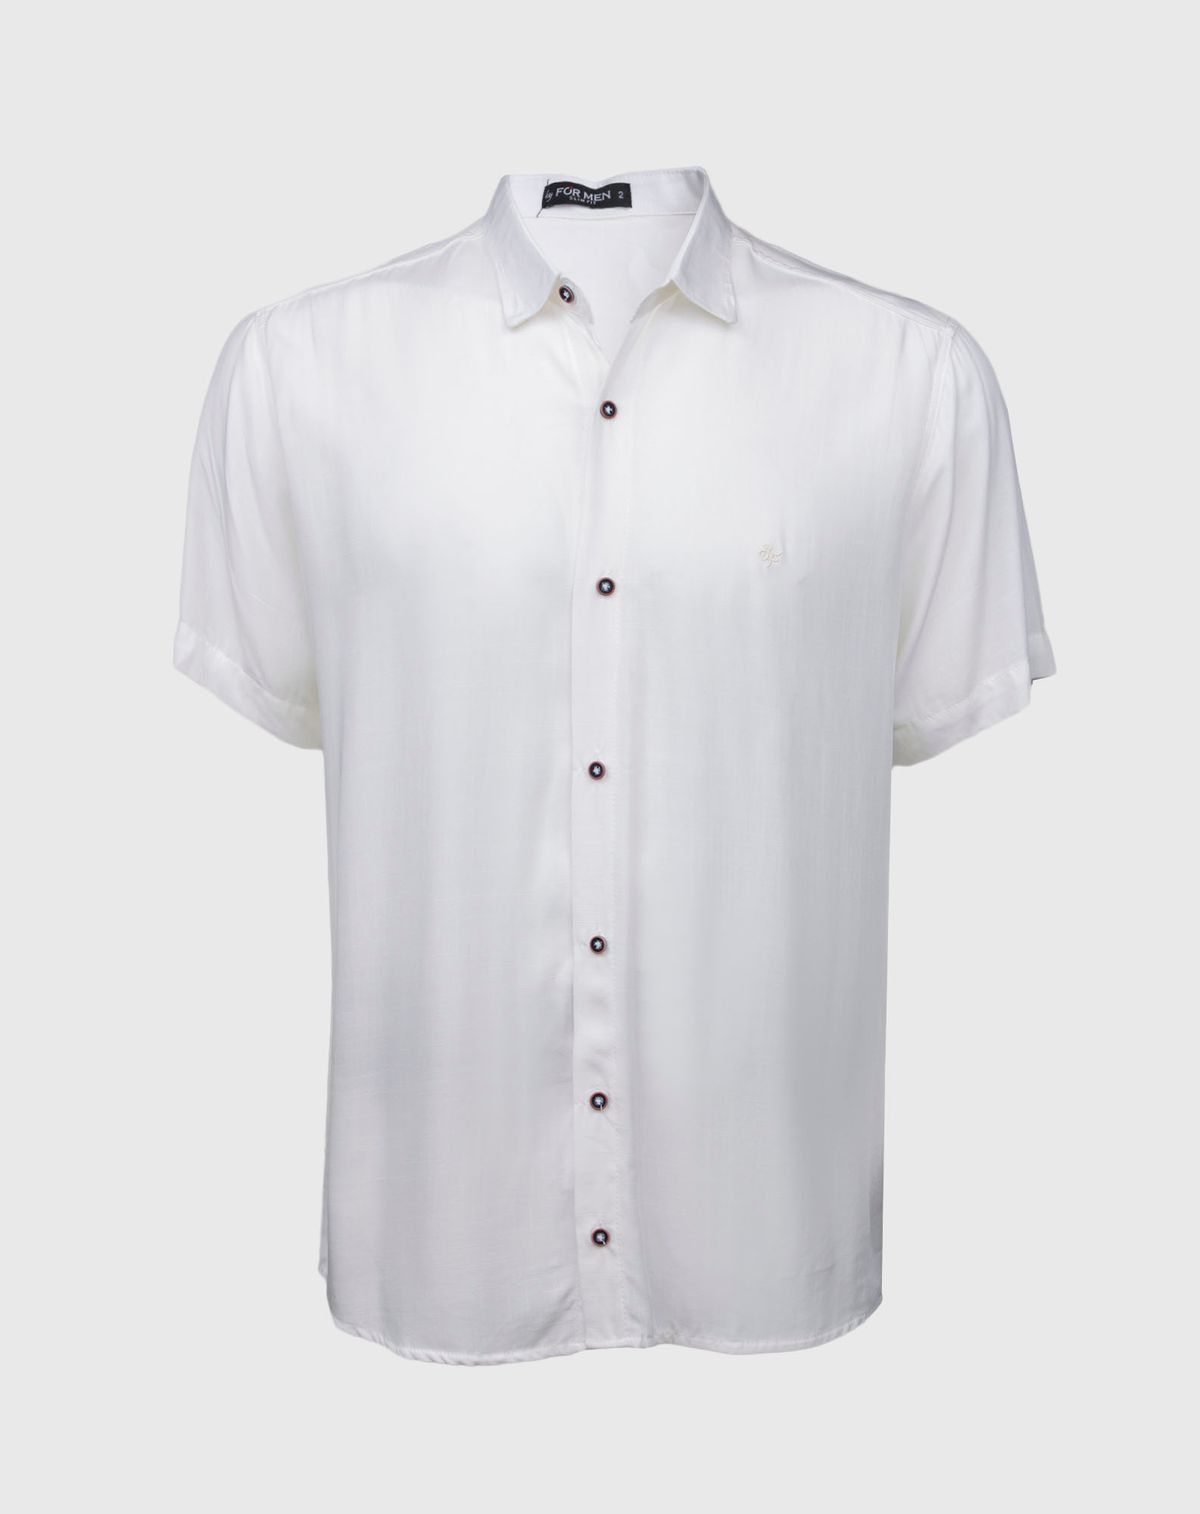 678895007-camisa-manga-curta-masculina-casual-off-white-g-91c